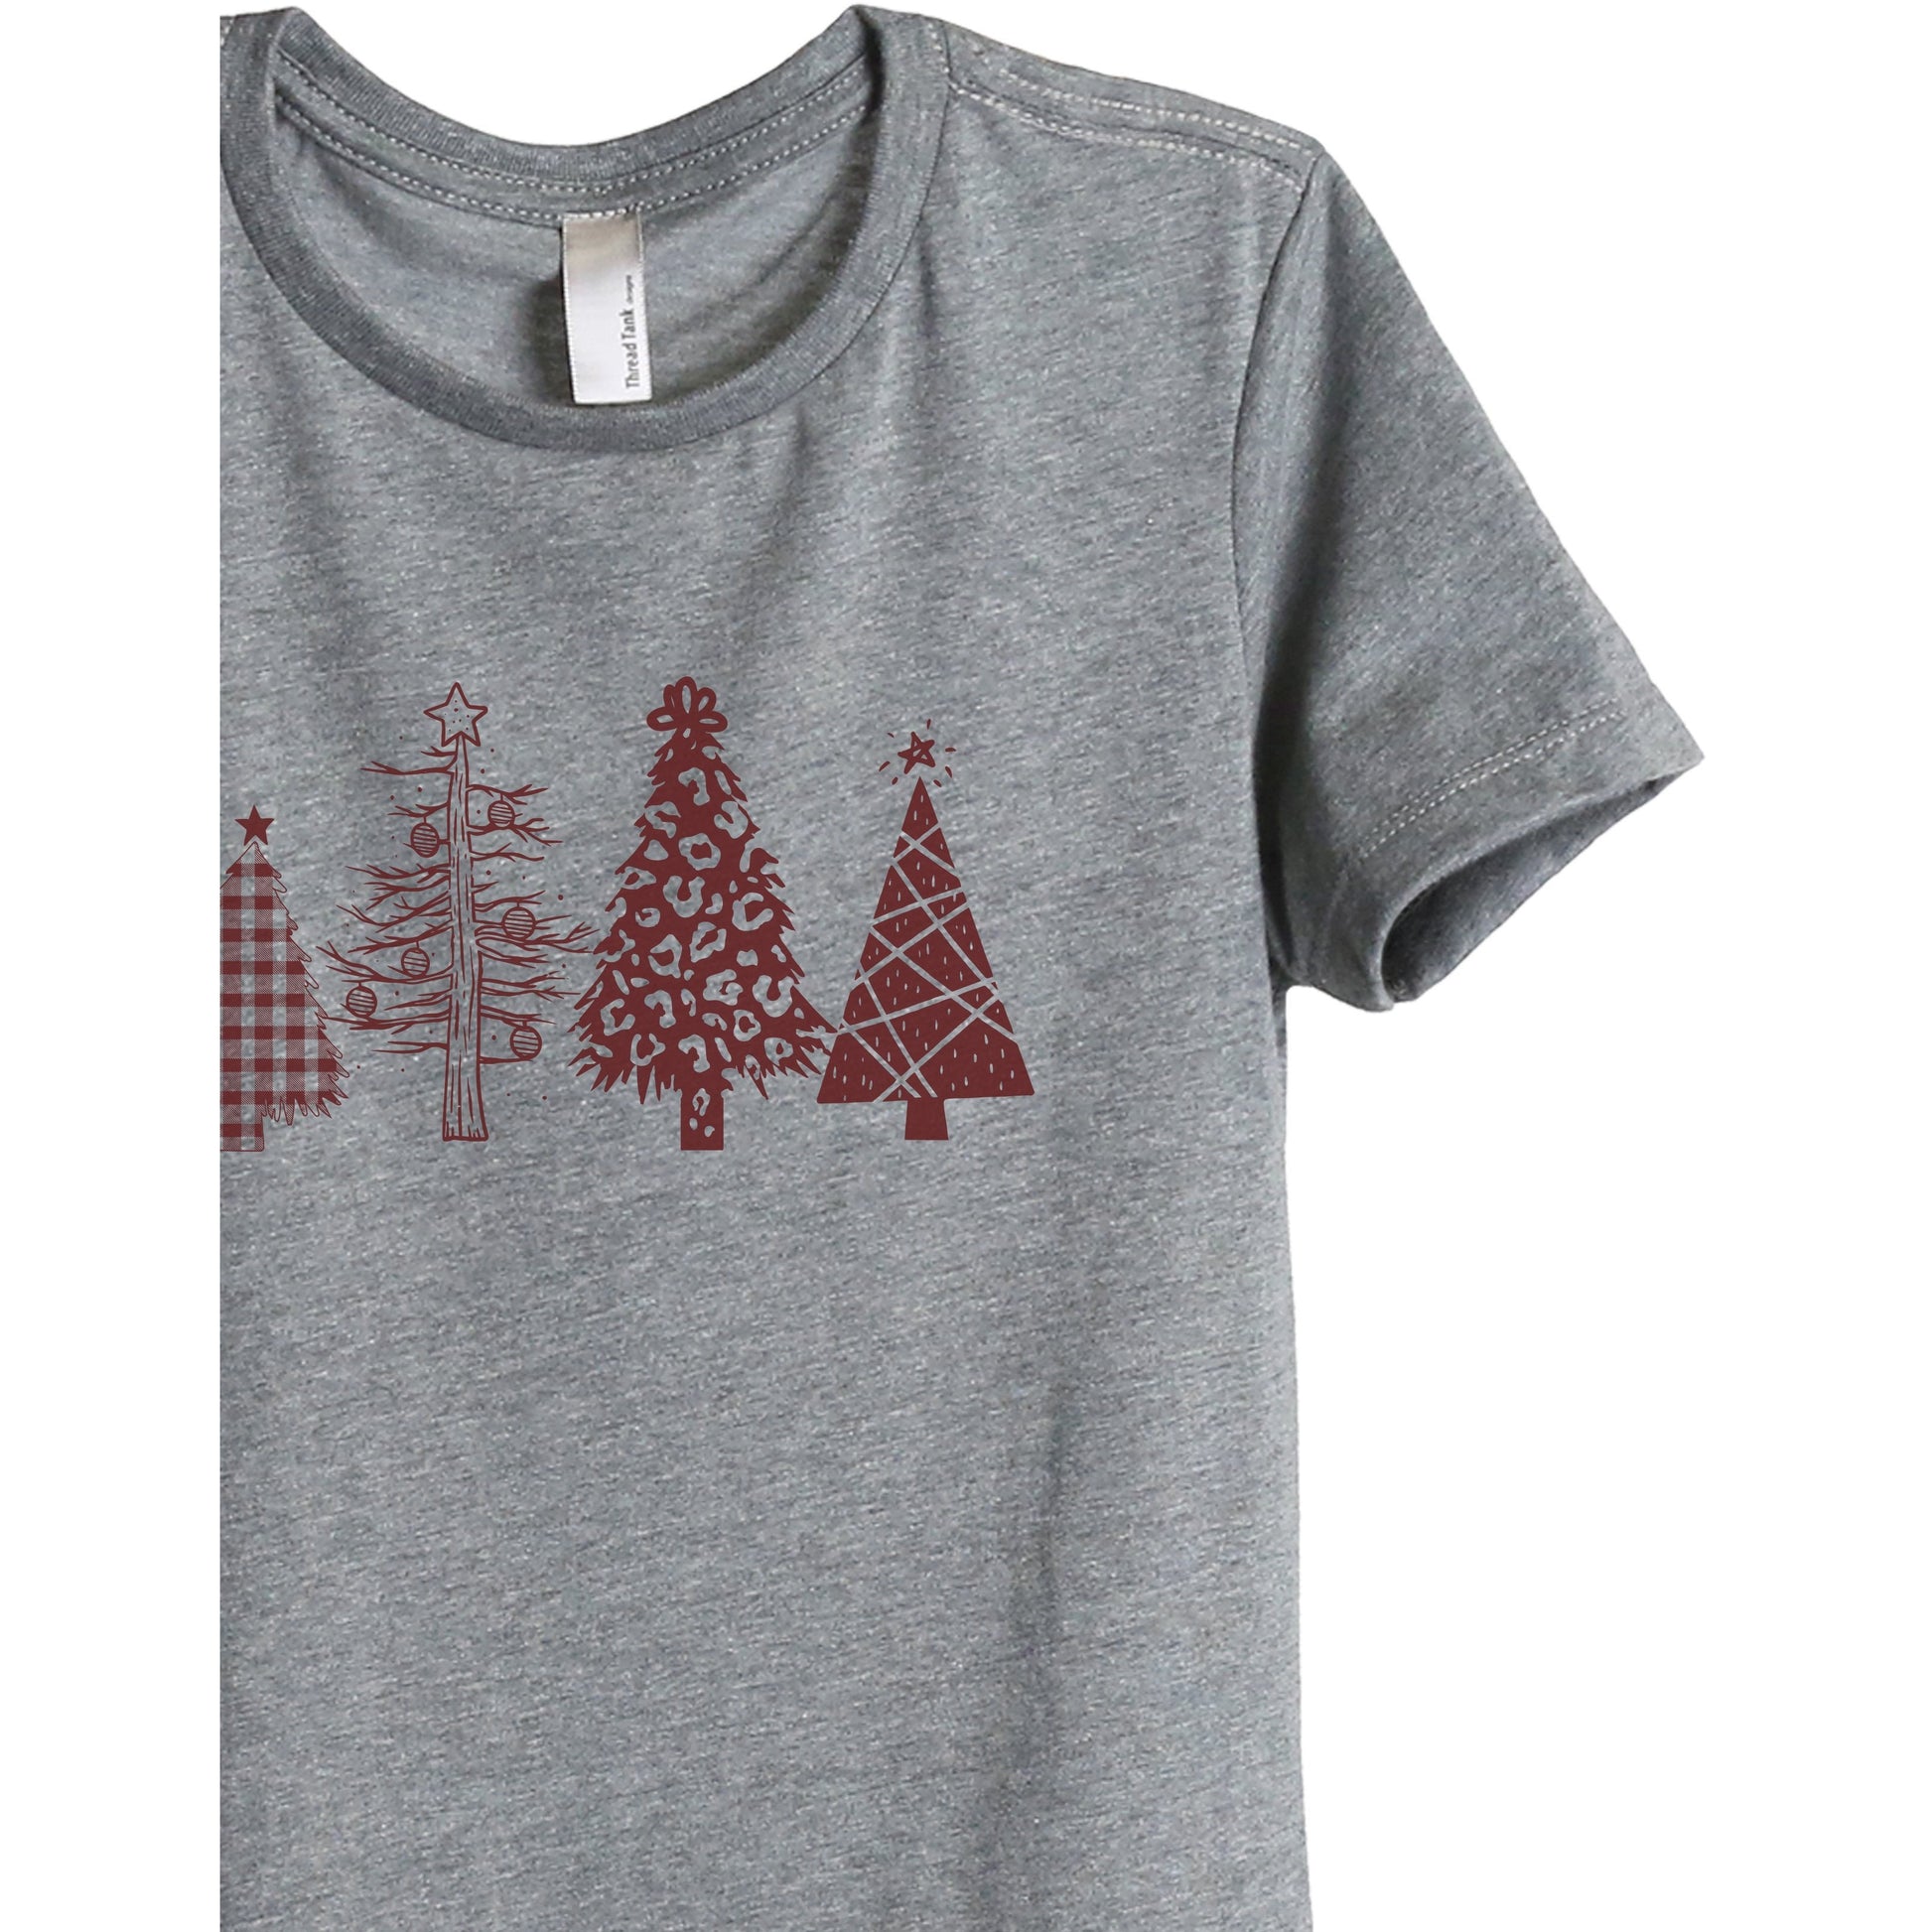 Christmas Tree Season Women's Relaxed Crewneck T-Shirt Top Tee Heather Grey Scarlet Print Zoom Details